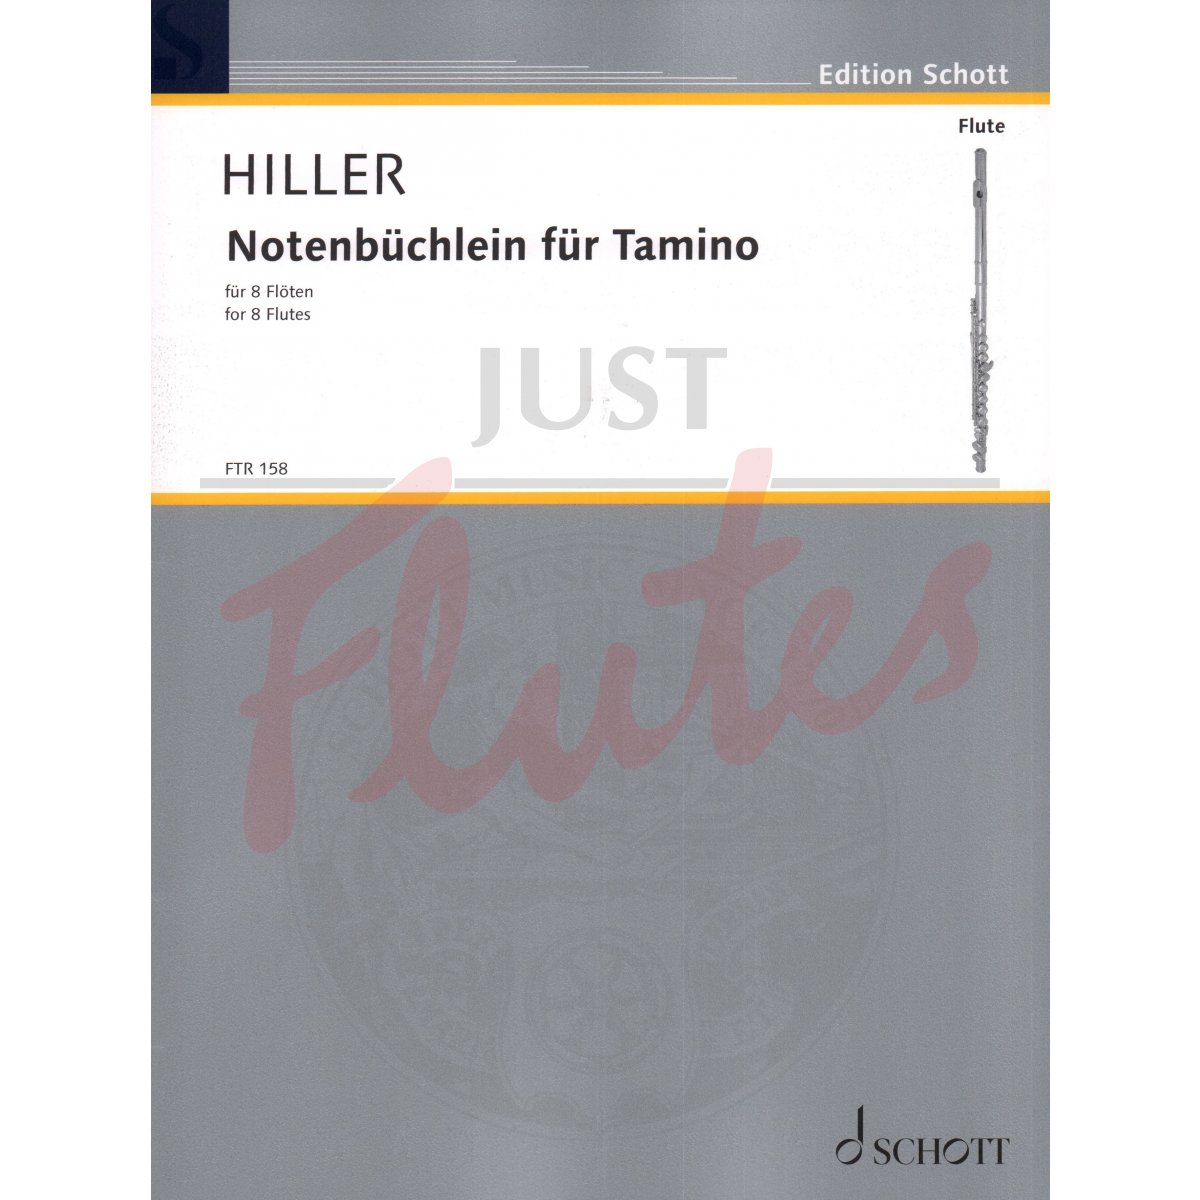 Little Notebook for Tamino for Flute Choir